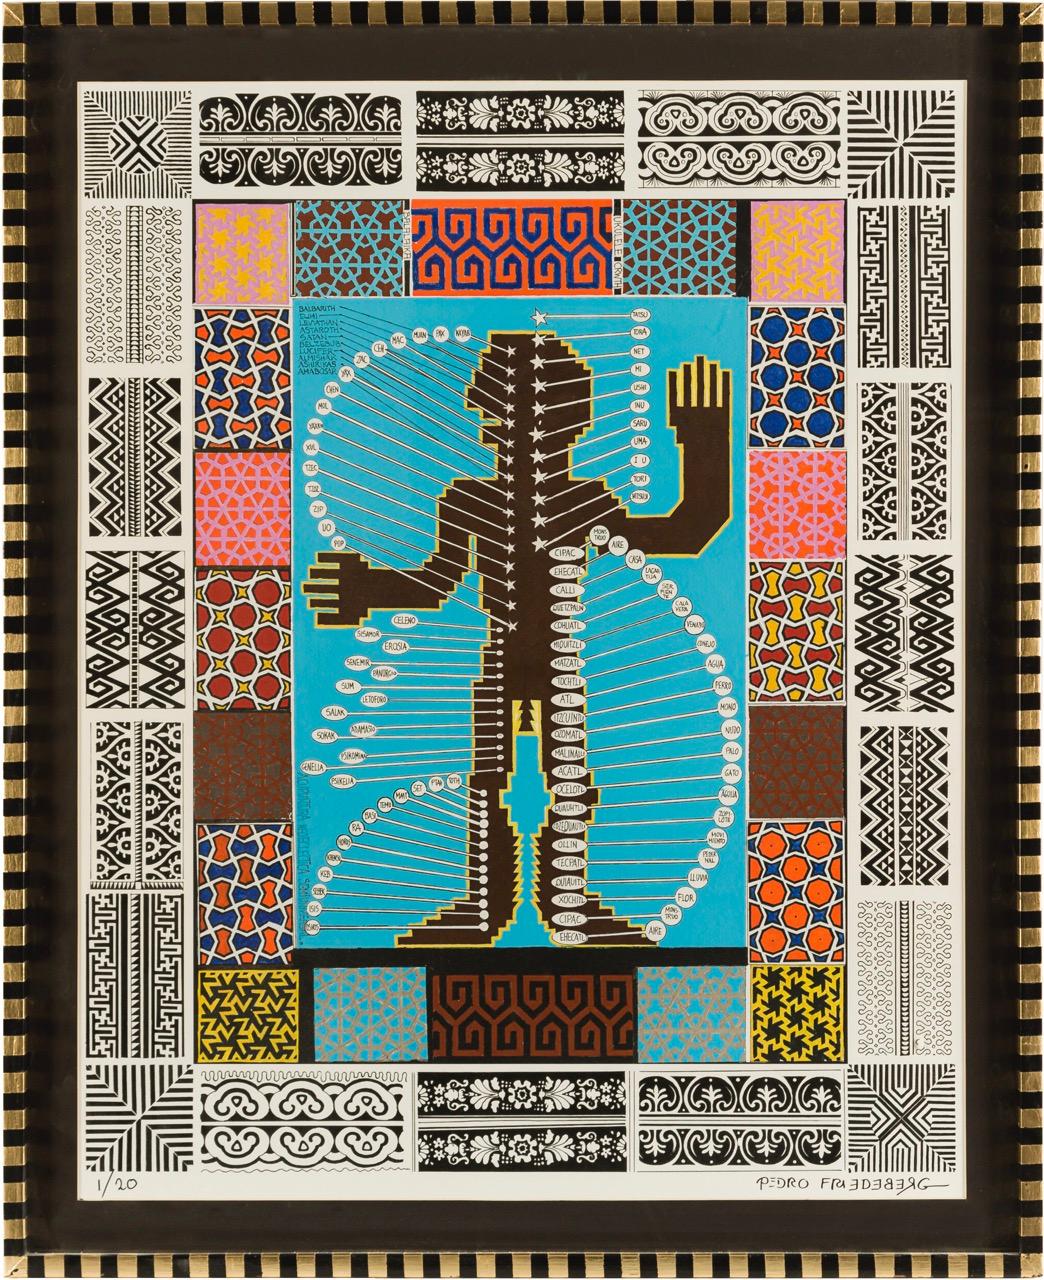 Pedro Friedeberg Figurative Print - "Acupuntura Neoecléctica" contemporary figurative patterns human figure print 